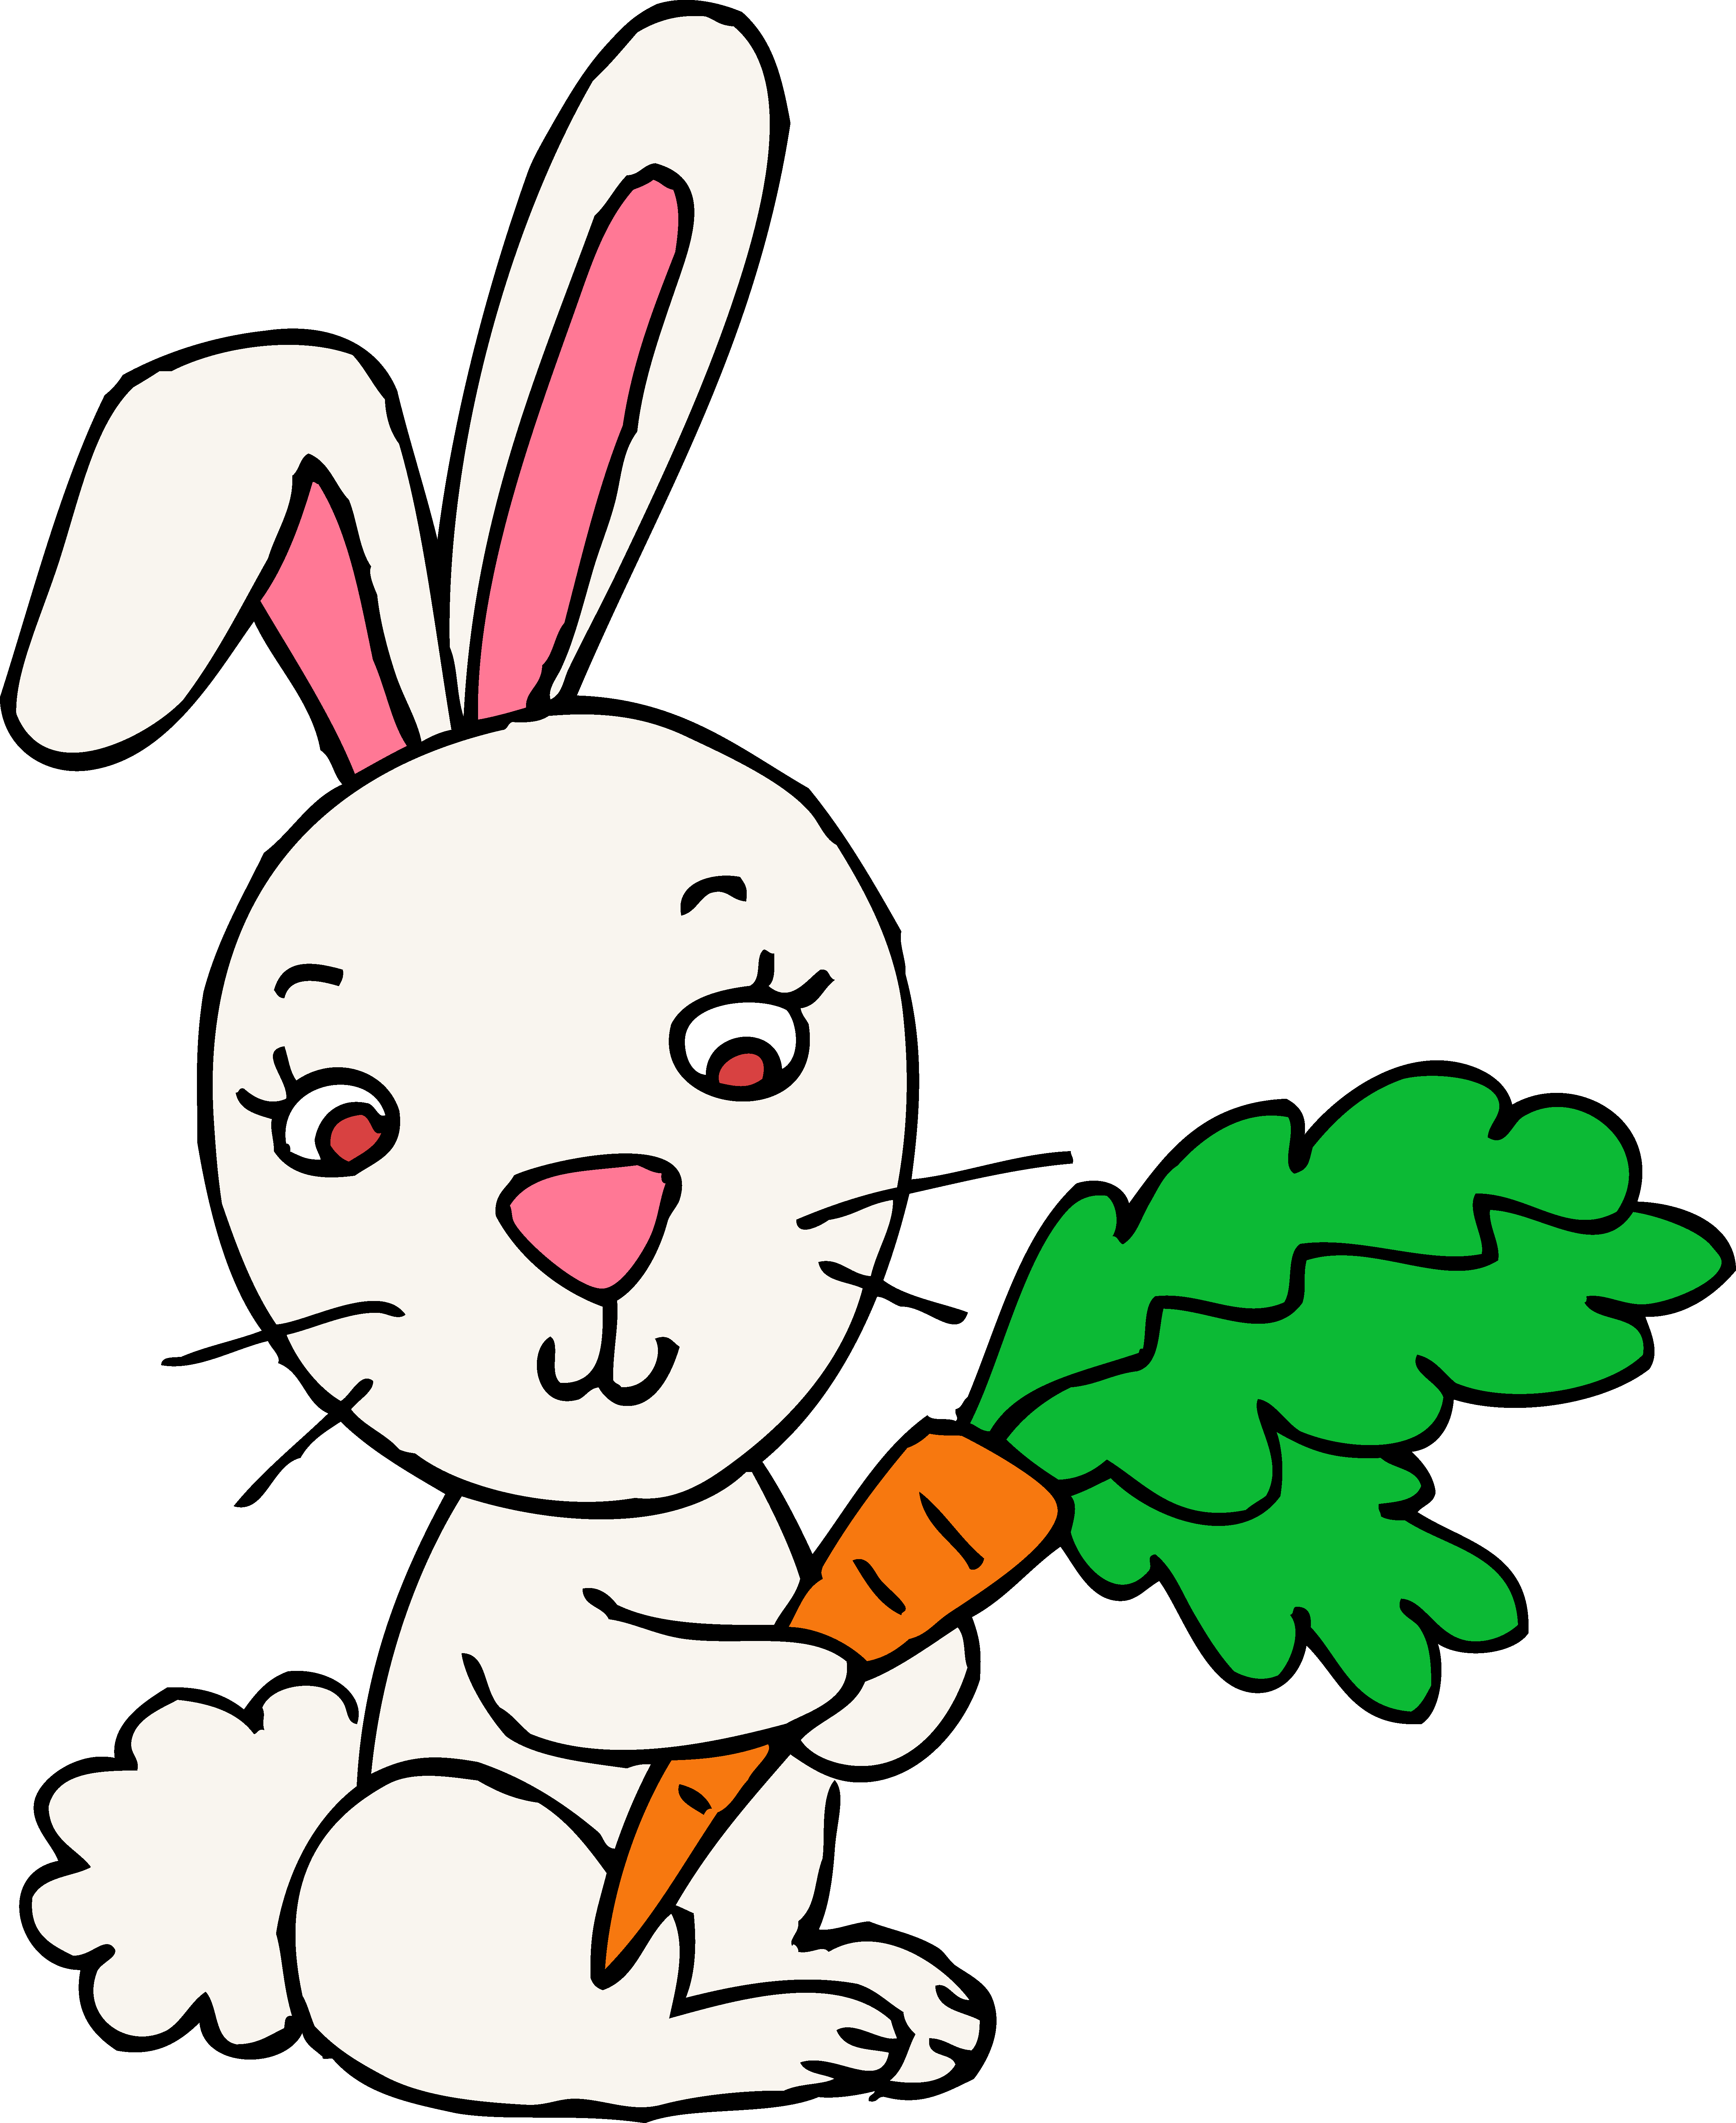 Free Rabbit Vet Cliparts, Download Free Rabbit Vet Cliparts png images